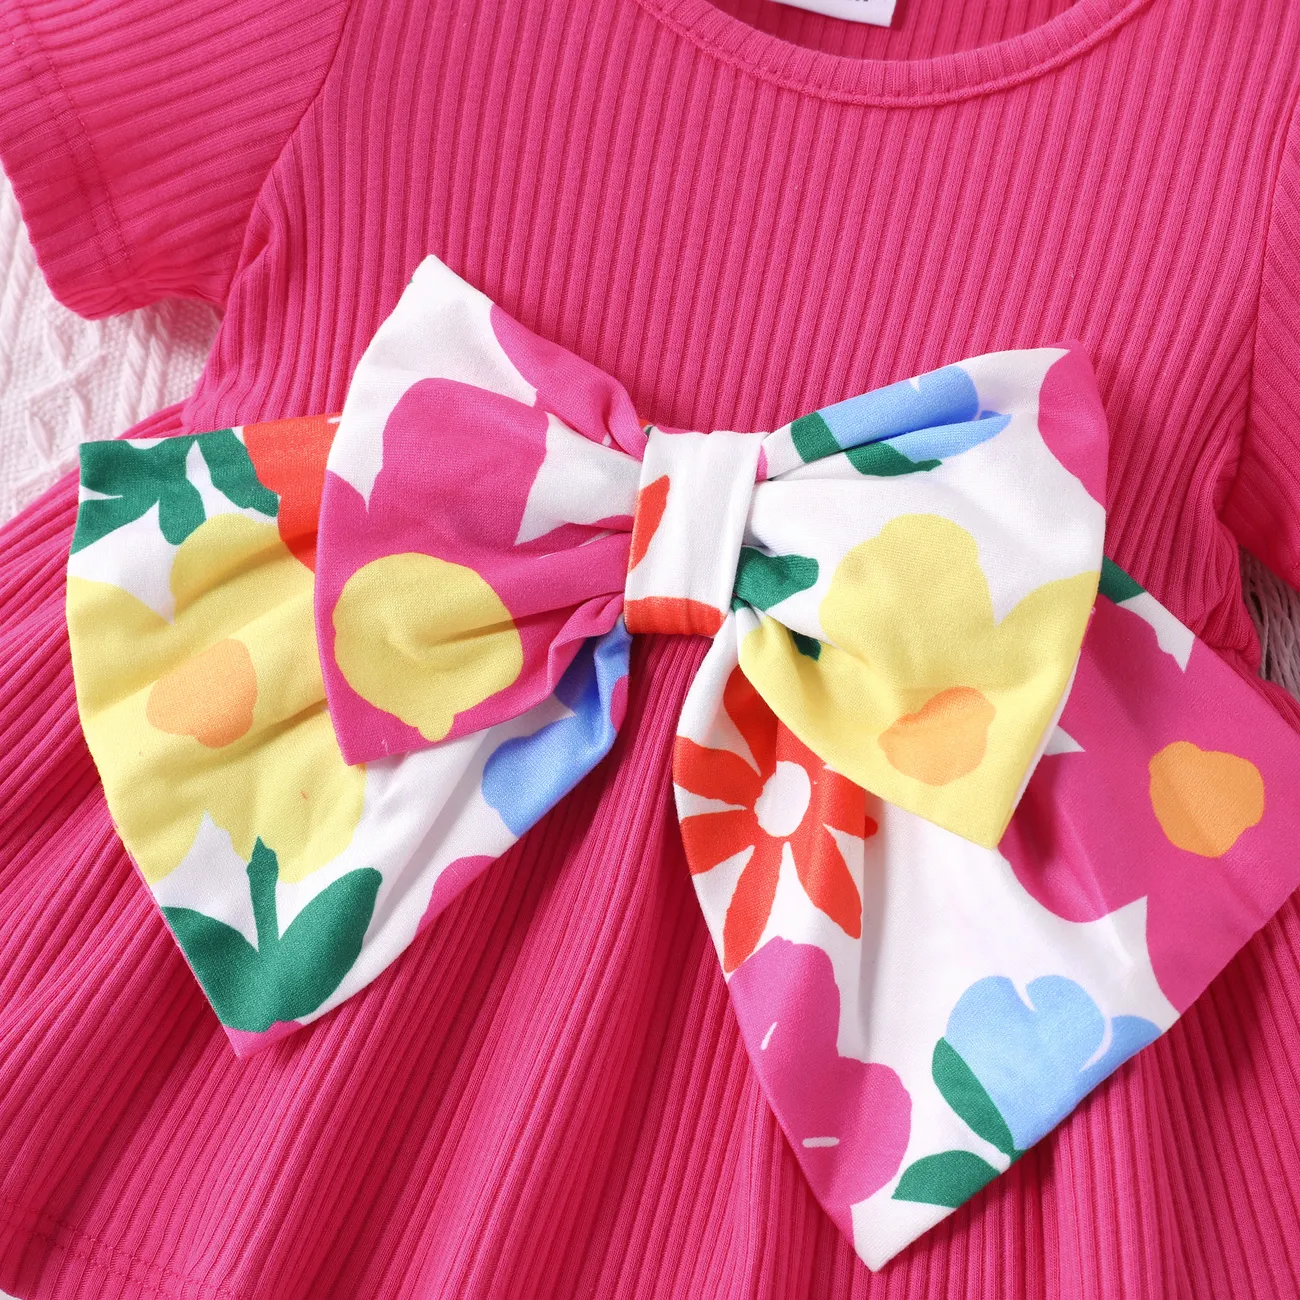 Baby Girl 2pcs Bowknot Design Tee and Floral Print Leggings Set Roseo big image 1